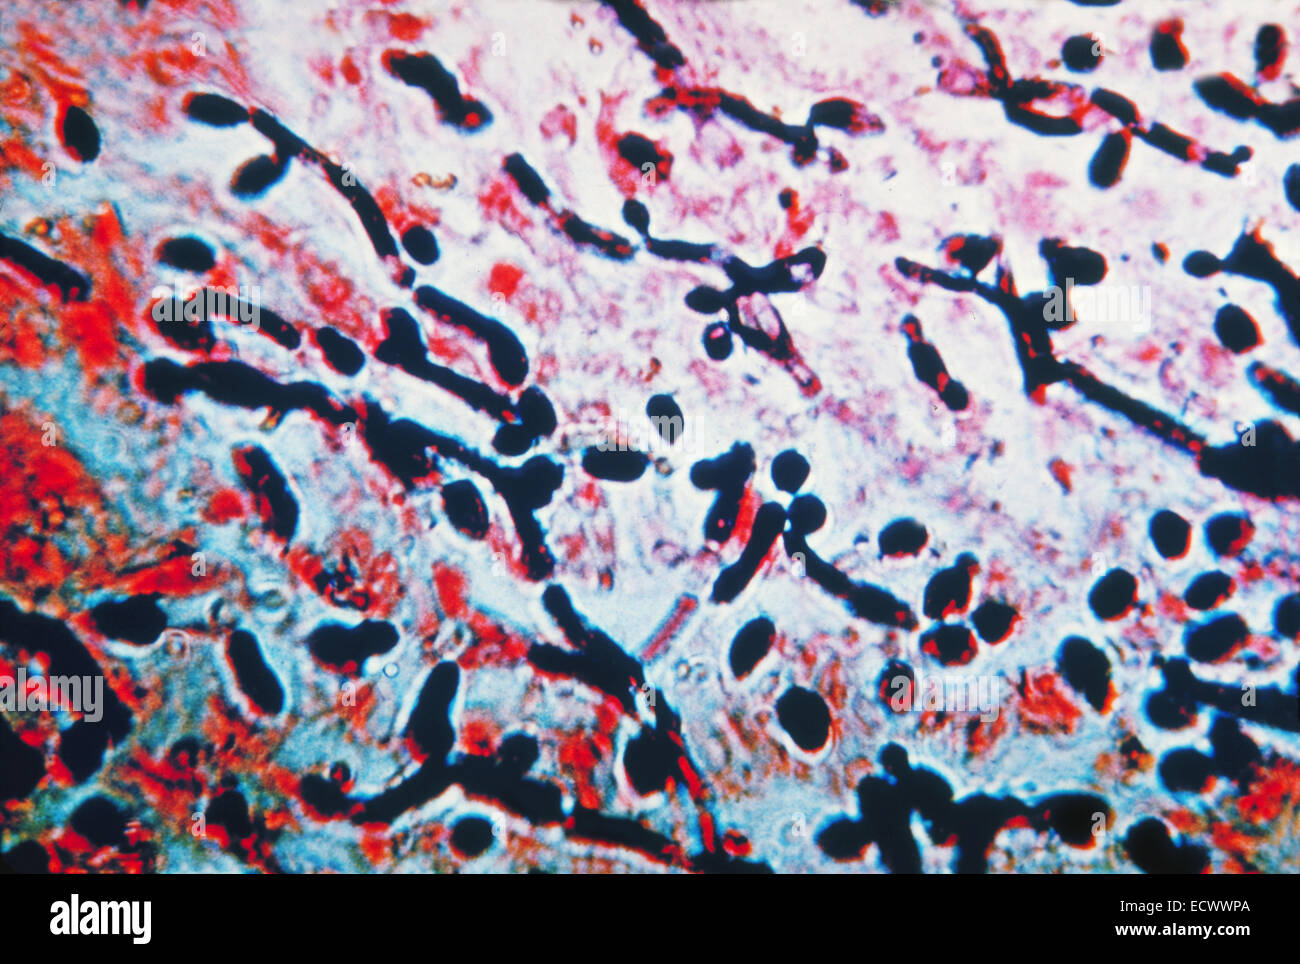 Histopathology of mucosal infection caused by Candida fungi. Stock Photo